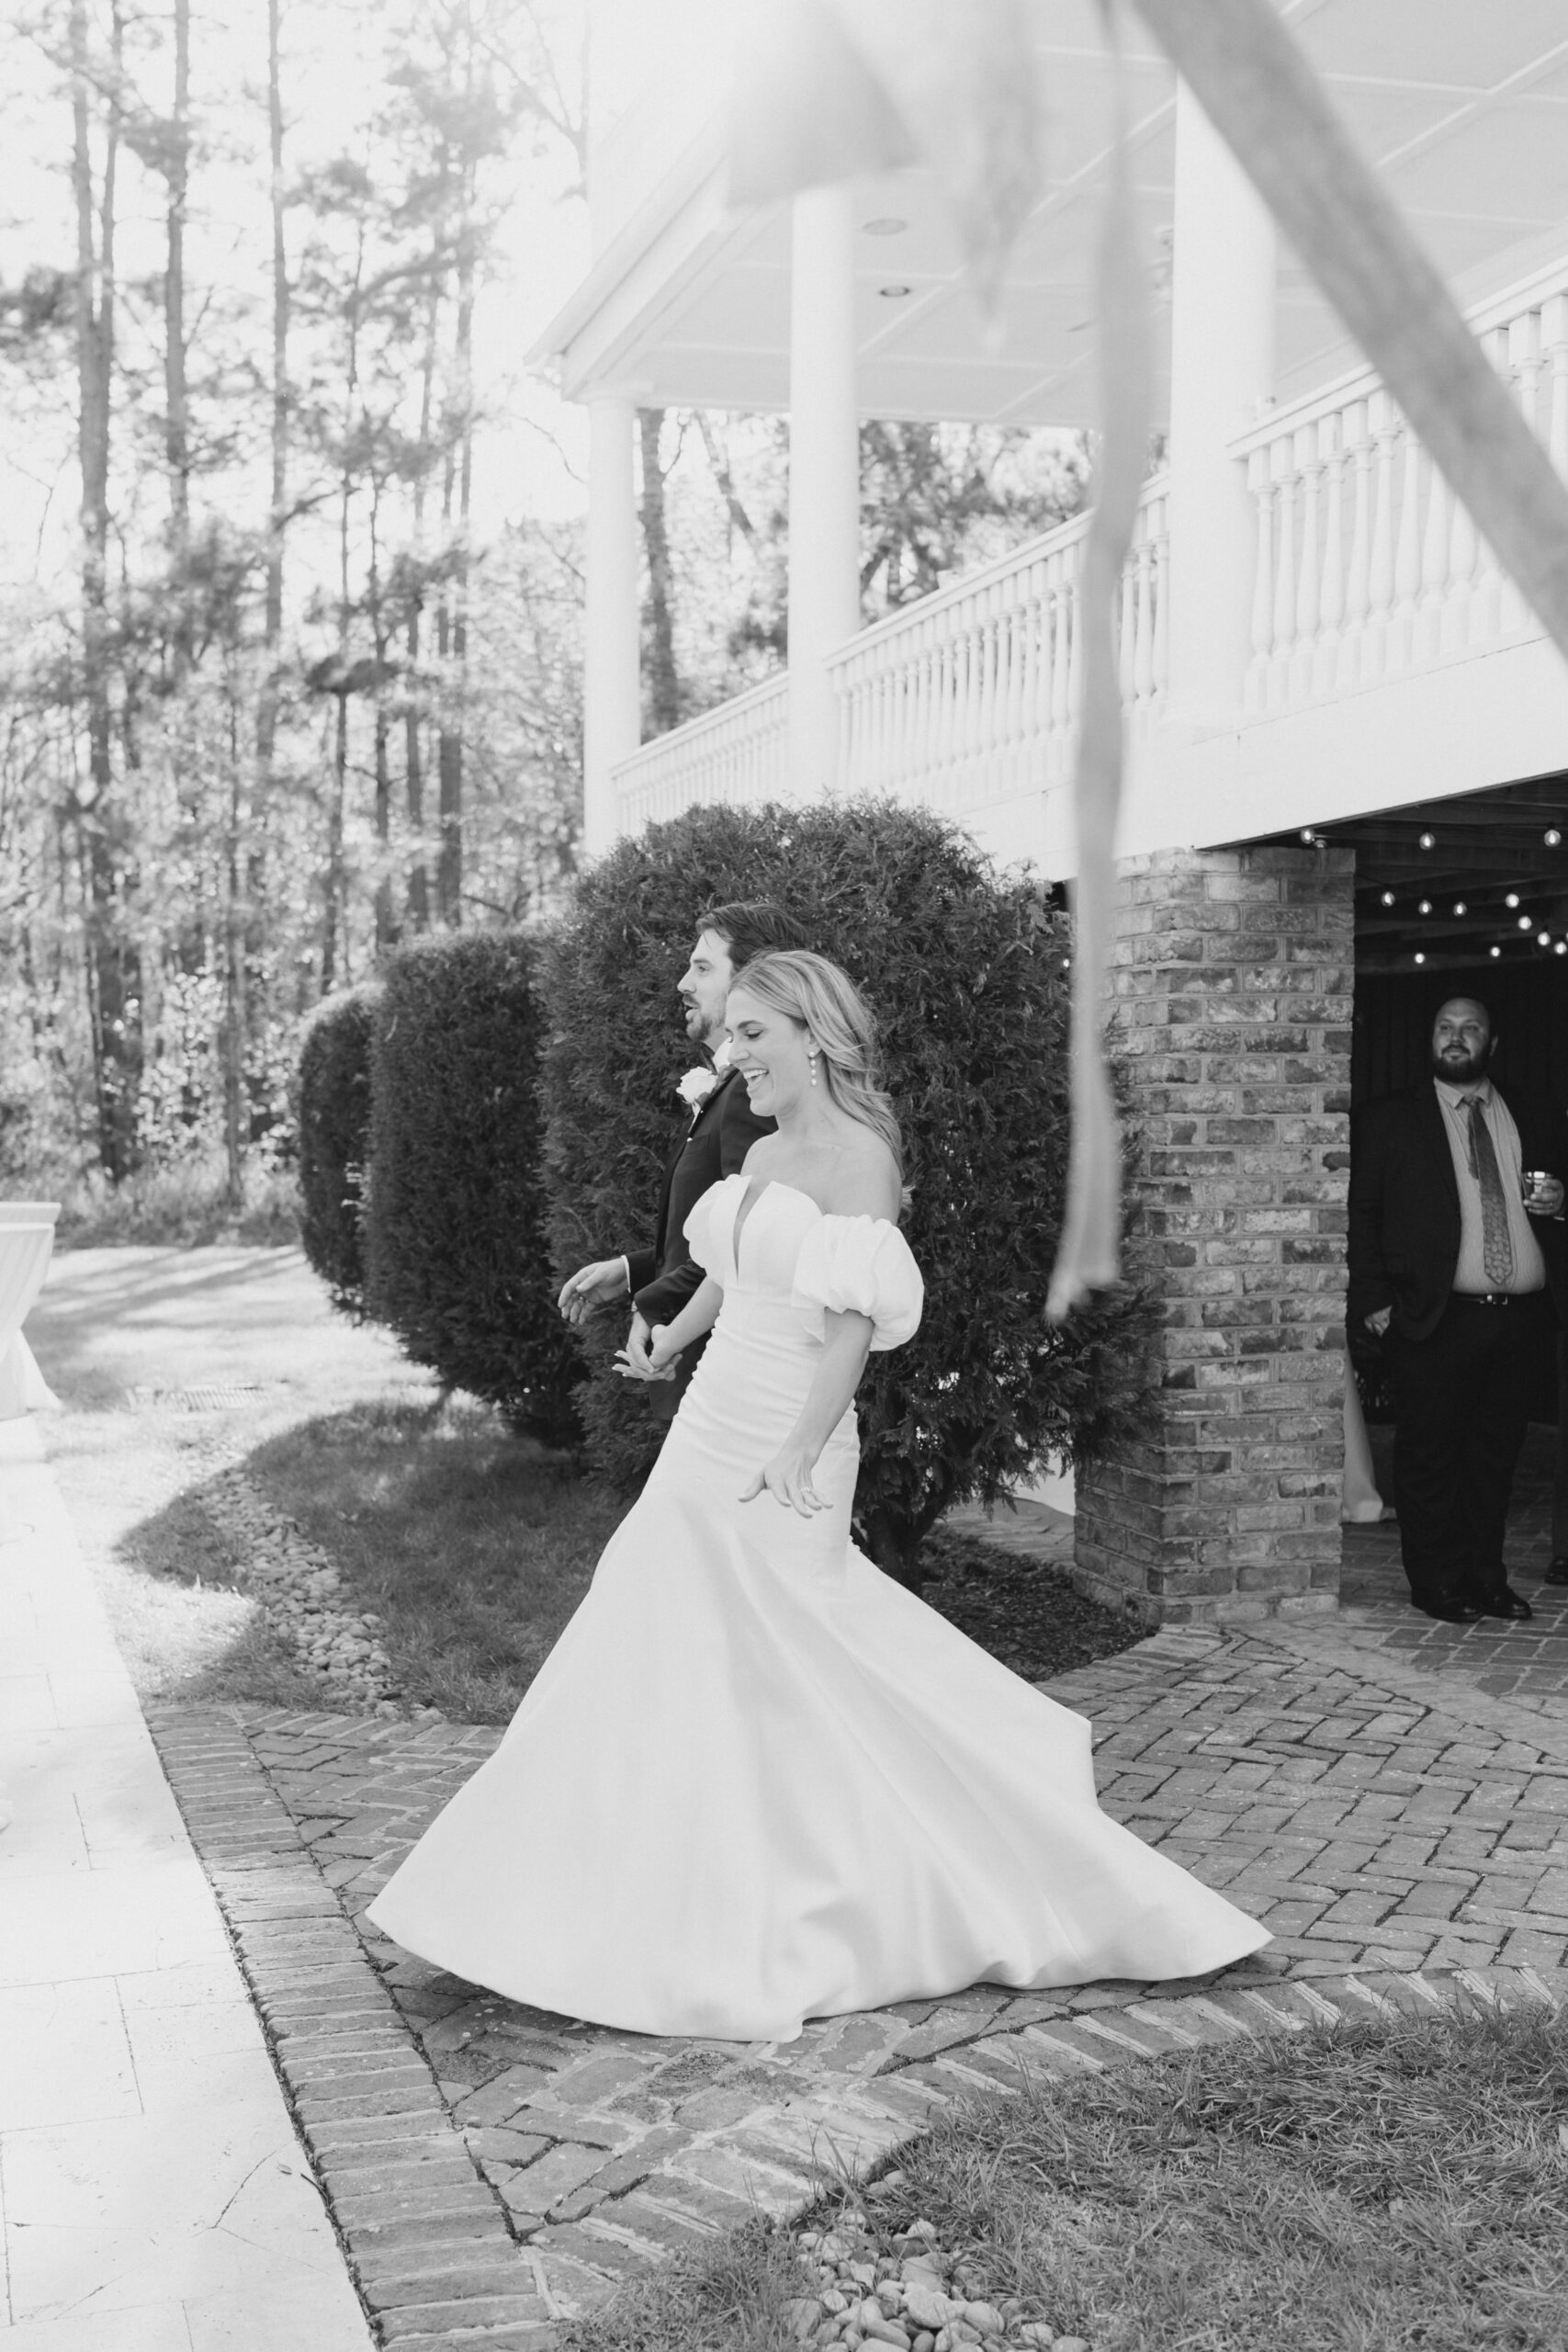 Grand Entrance Charleston Spring Wedding.East Coast Outdoor Destination Wedding Photographer